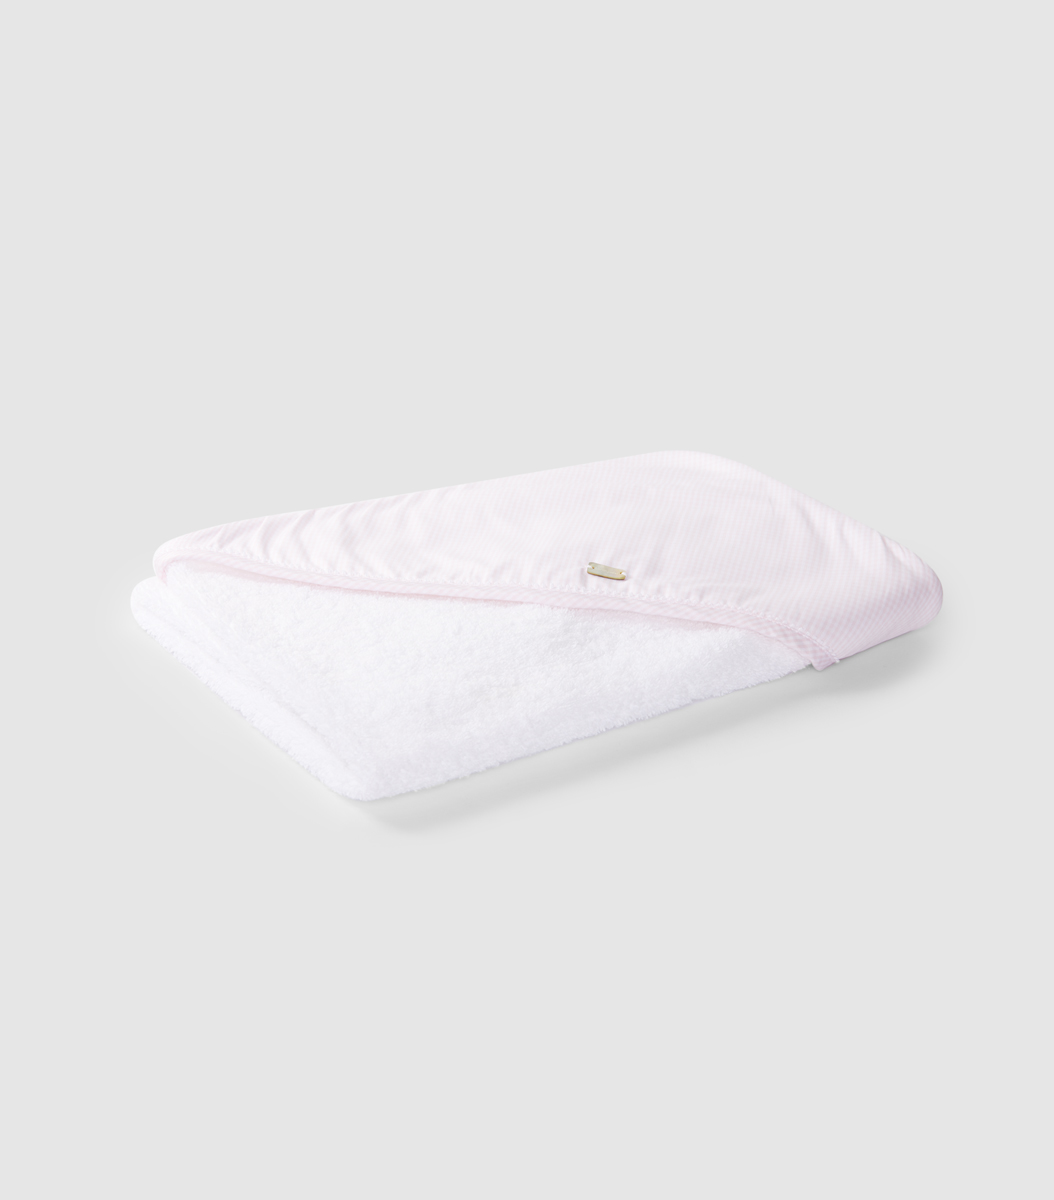 Laranjinha Pink/White Towel i1422